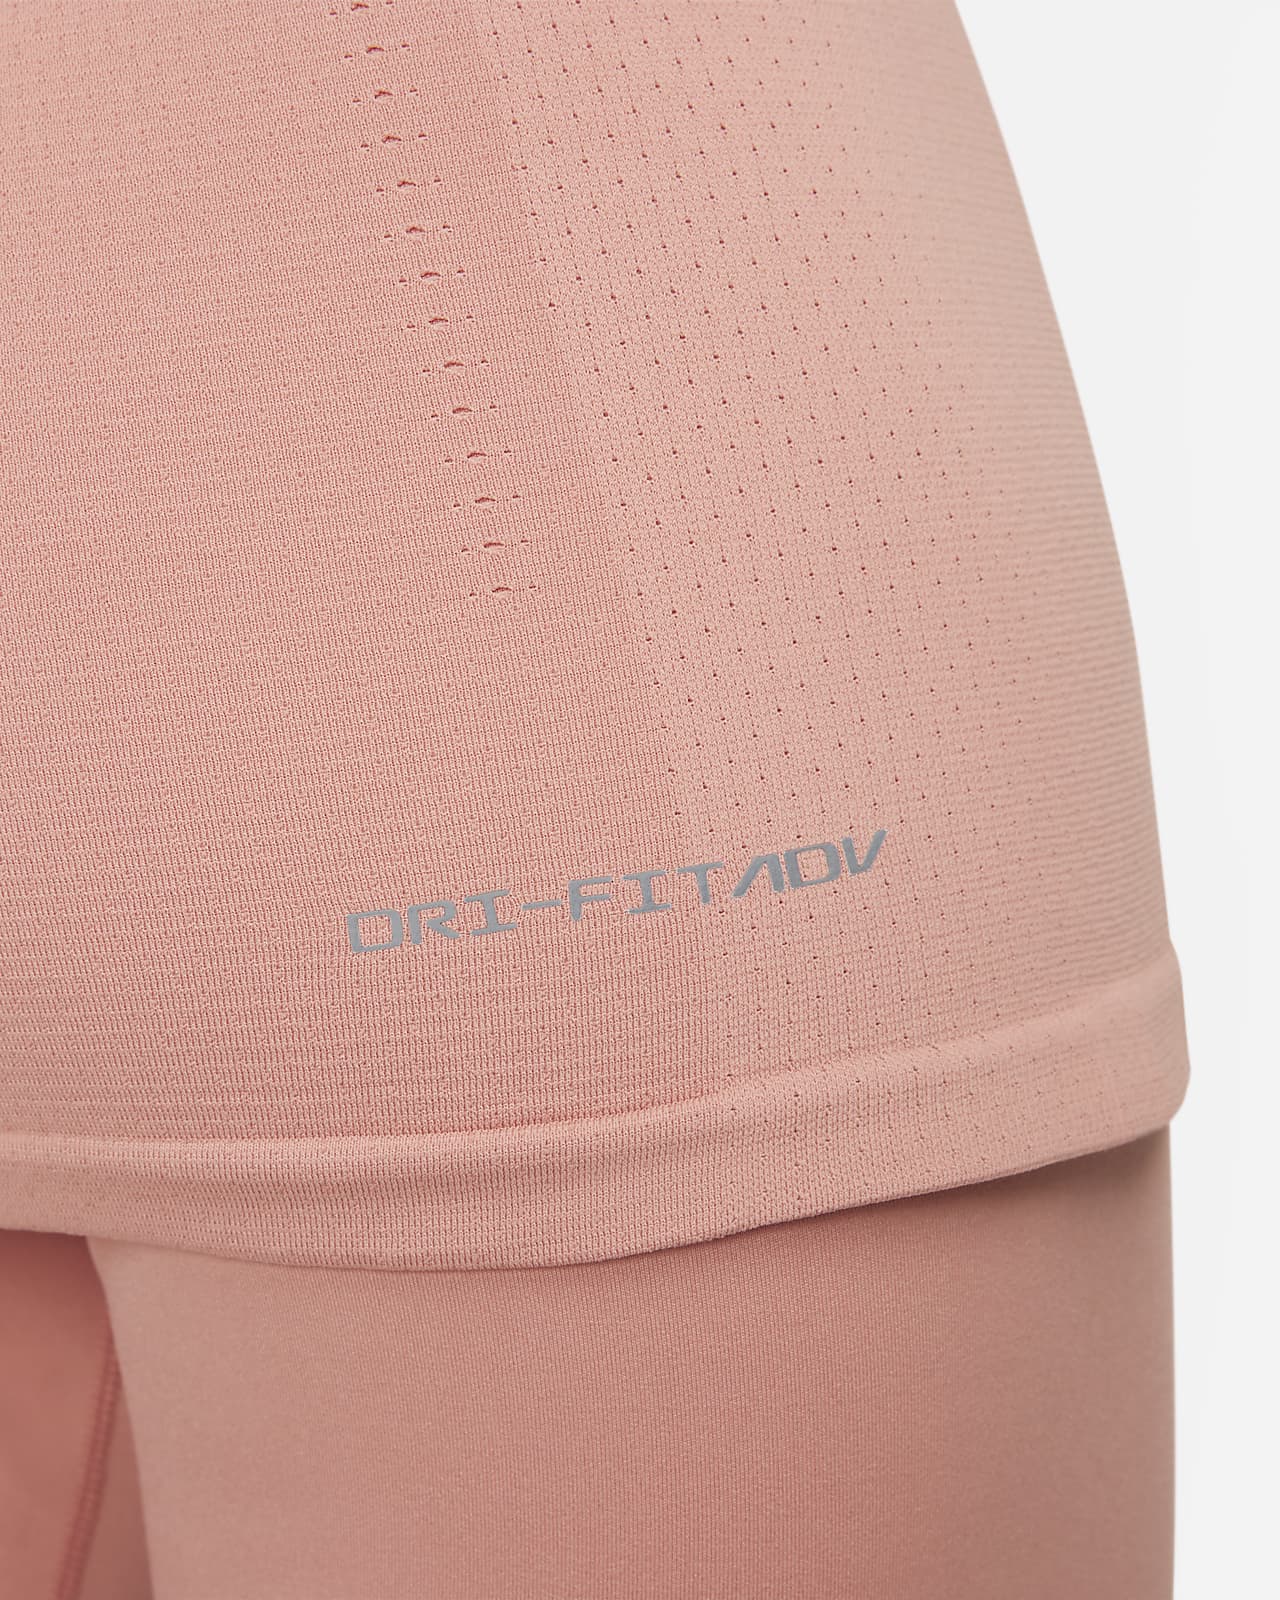 Nike Dri-FIT ADV Aura Women's Slim-Fit Short-Sleeve Top. Nike AT